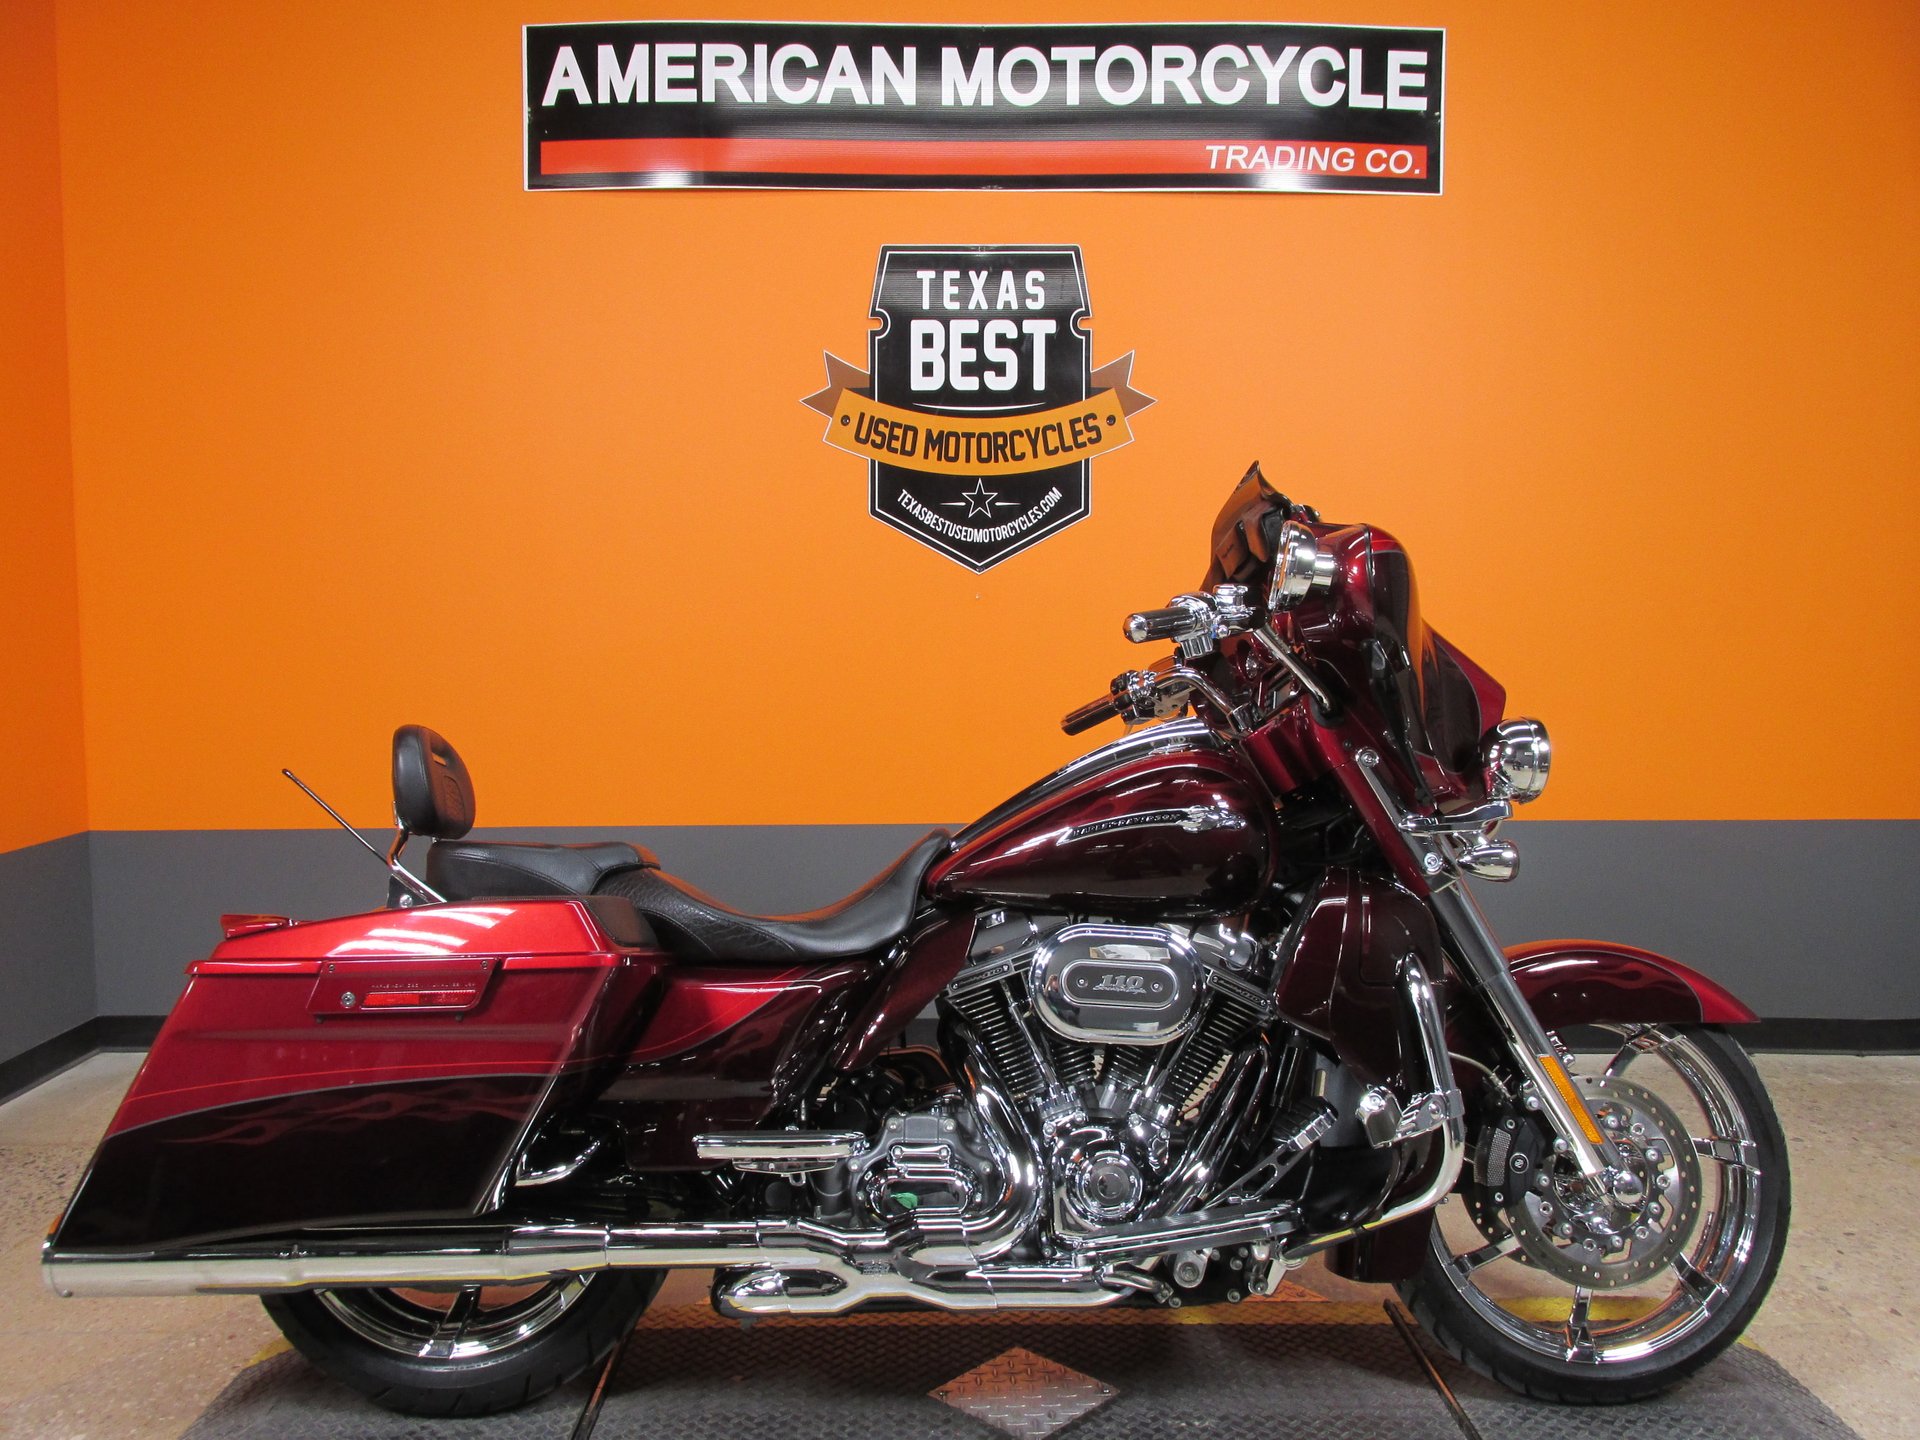 2012 Harley Davidson Cvo Street Glide American Motorcycle Trading Company Used Harley Davidson Motorcycles